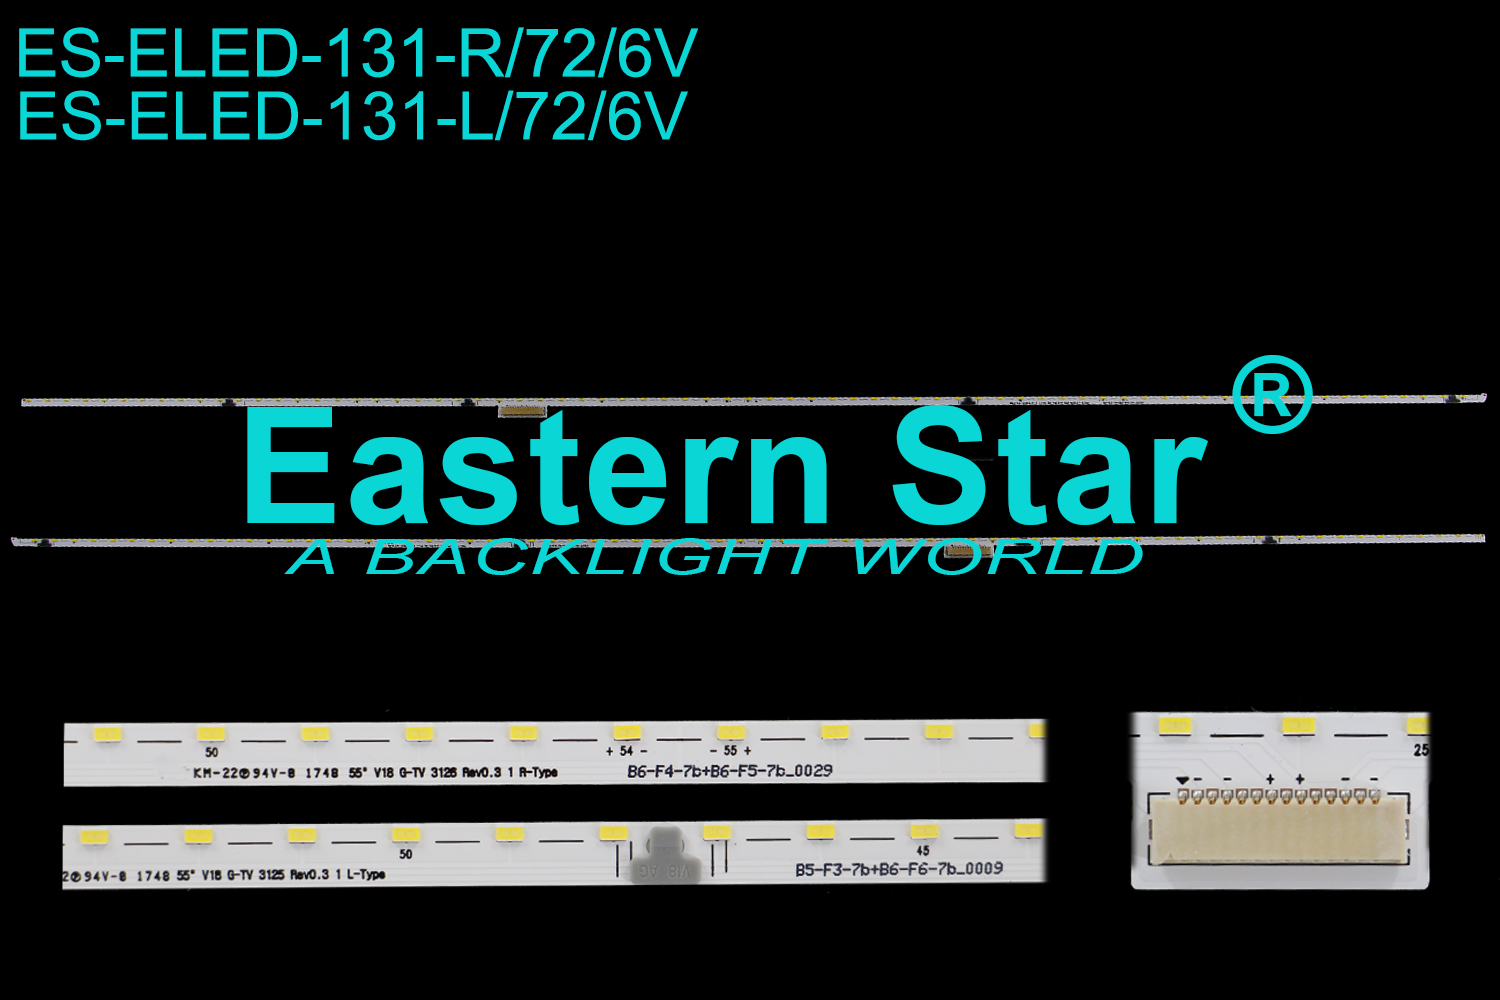 ES-ELED-131 ELED/EDGE TV backlight use for Lg 55'' 55 V18 G-TV 3126 Rev0.3 1 R-Type   B6-F4-7b+B6-F5-7b-0029  55”V18 G-TV 3125 Rev0.3 1 L-Type   B5-F3-7b+B6-F6-7b-0009(2)